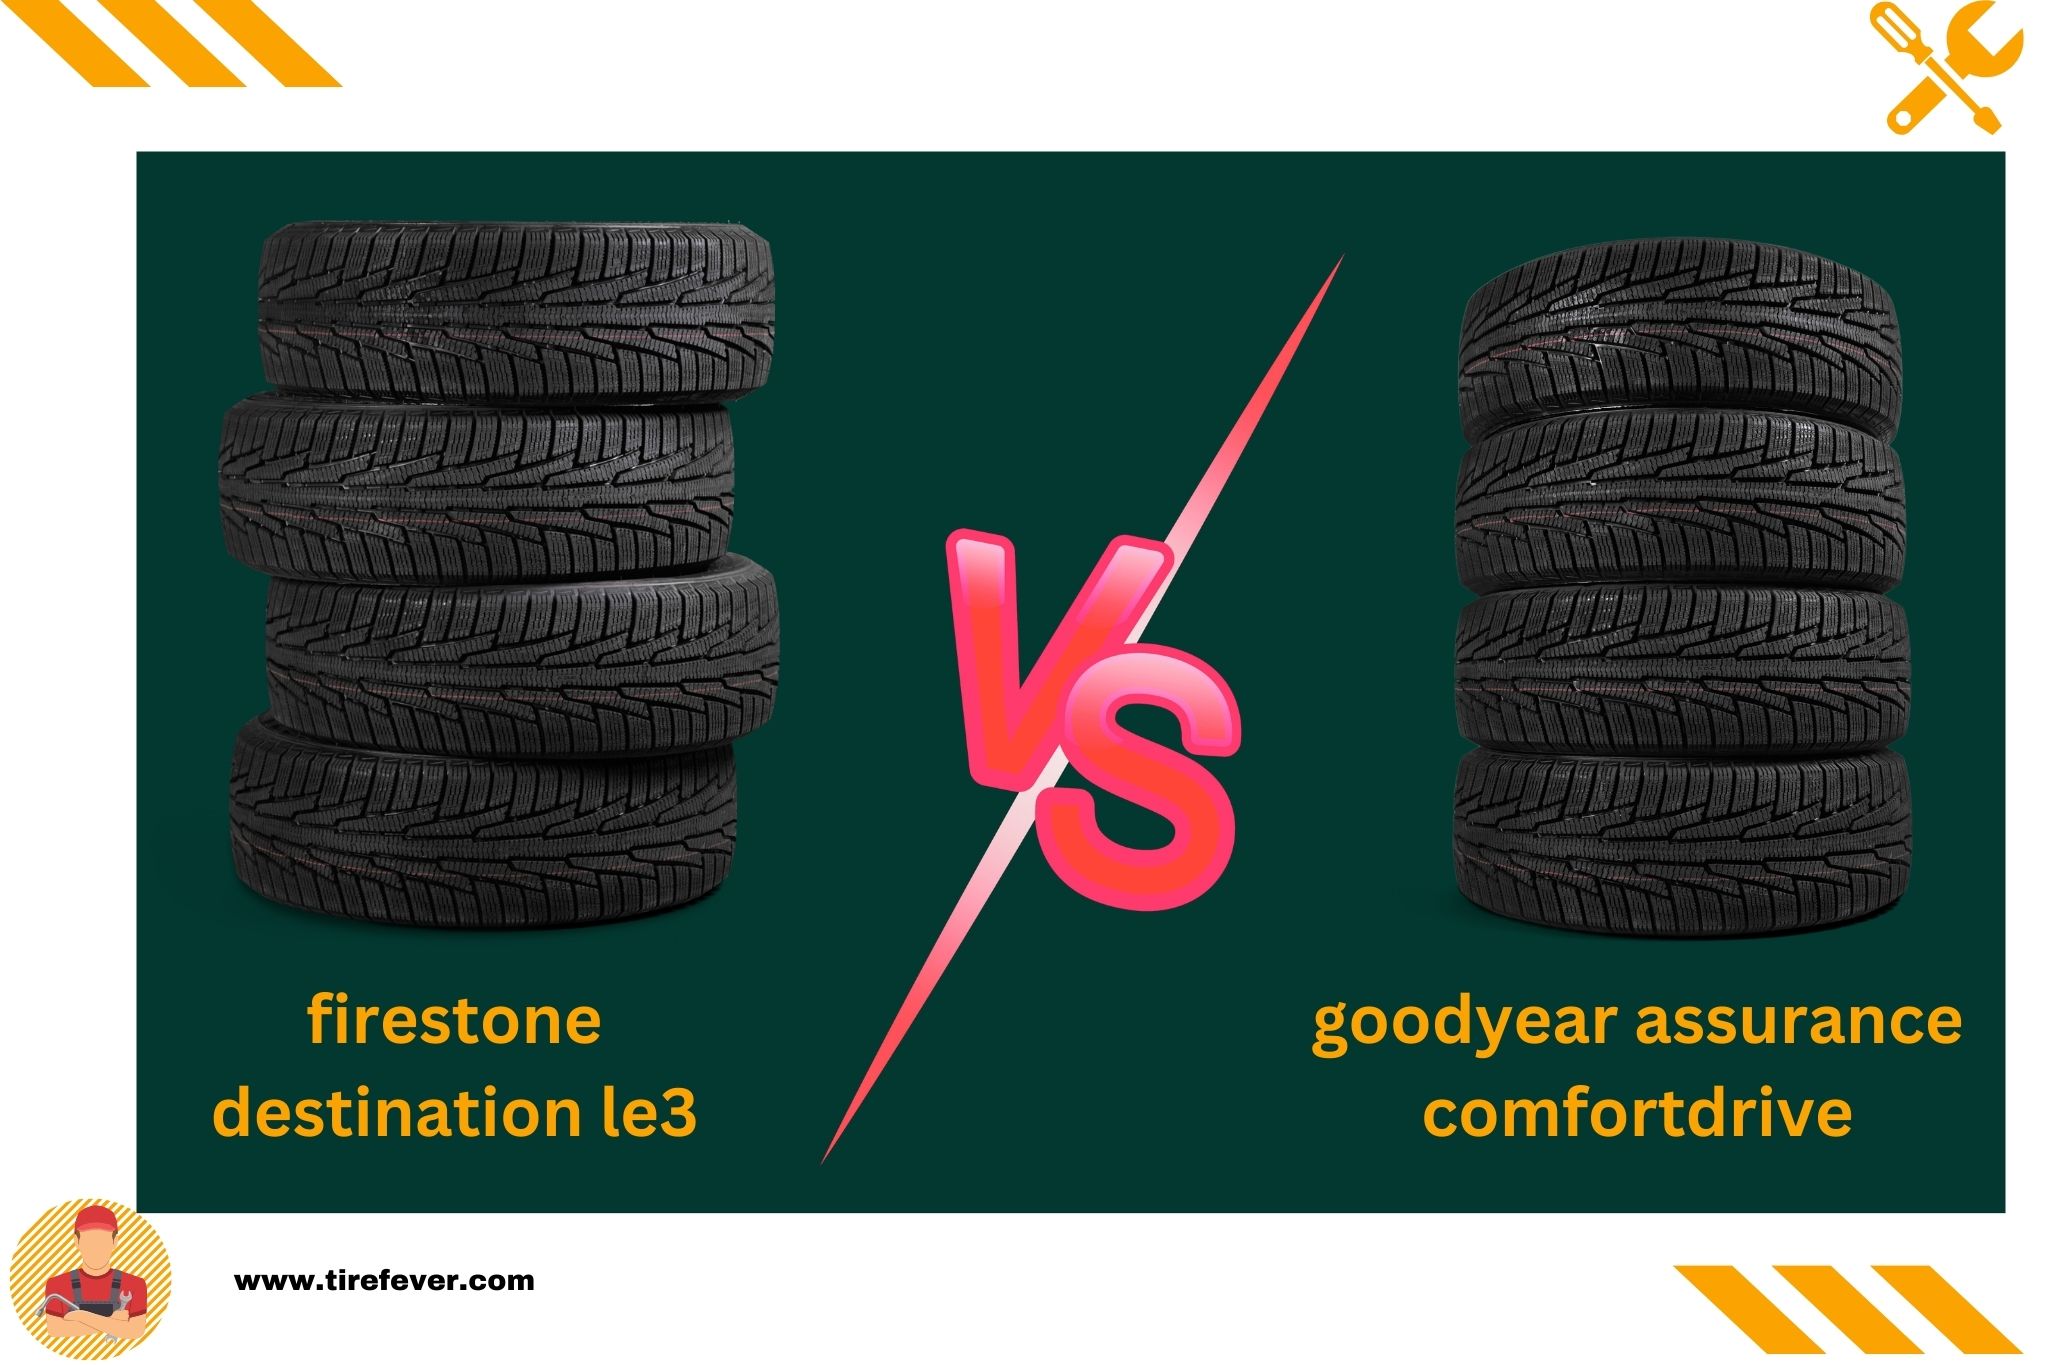 firestone destination le3 vs goodyear assurance comfortdrive